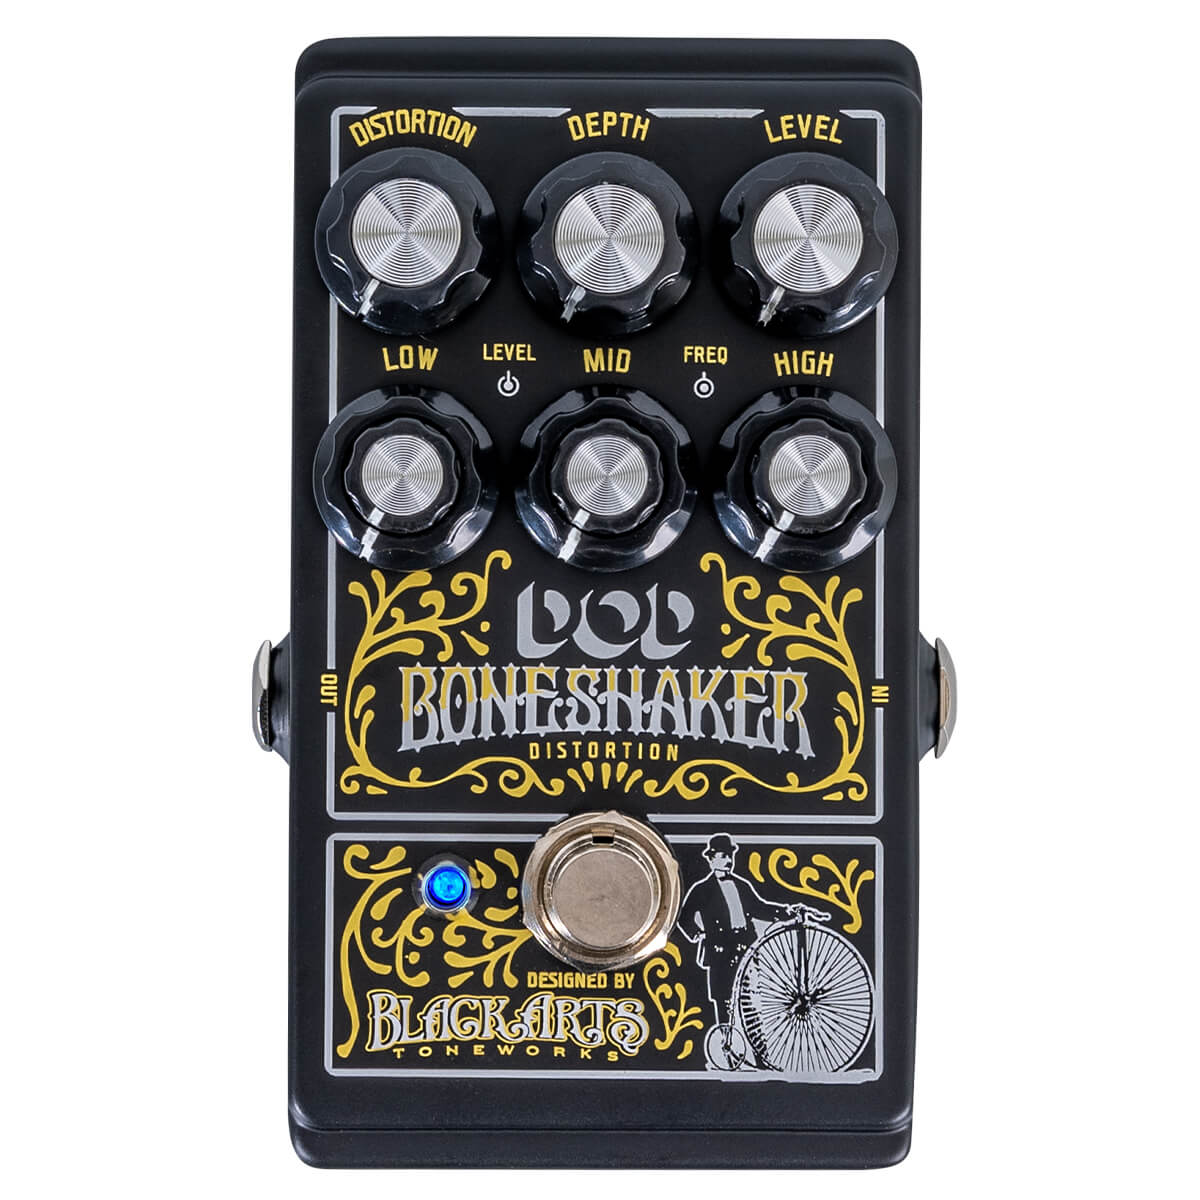 DOD Boneshaker distortion guitar pedal